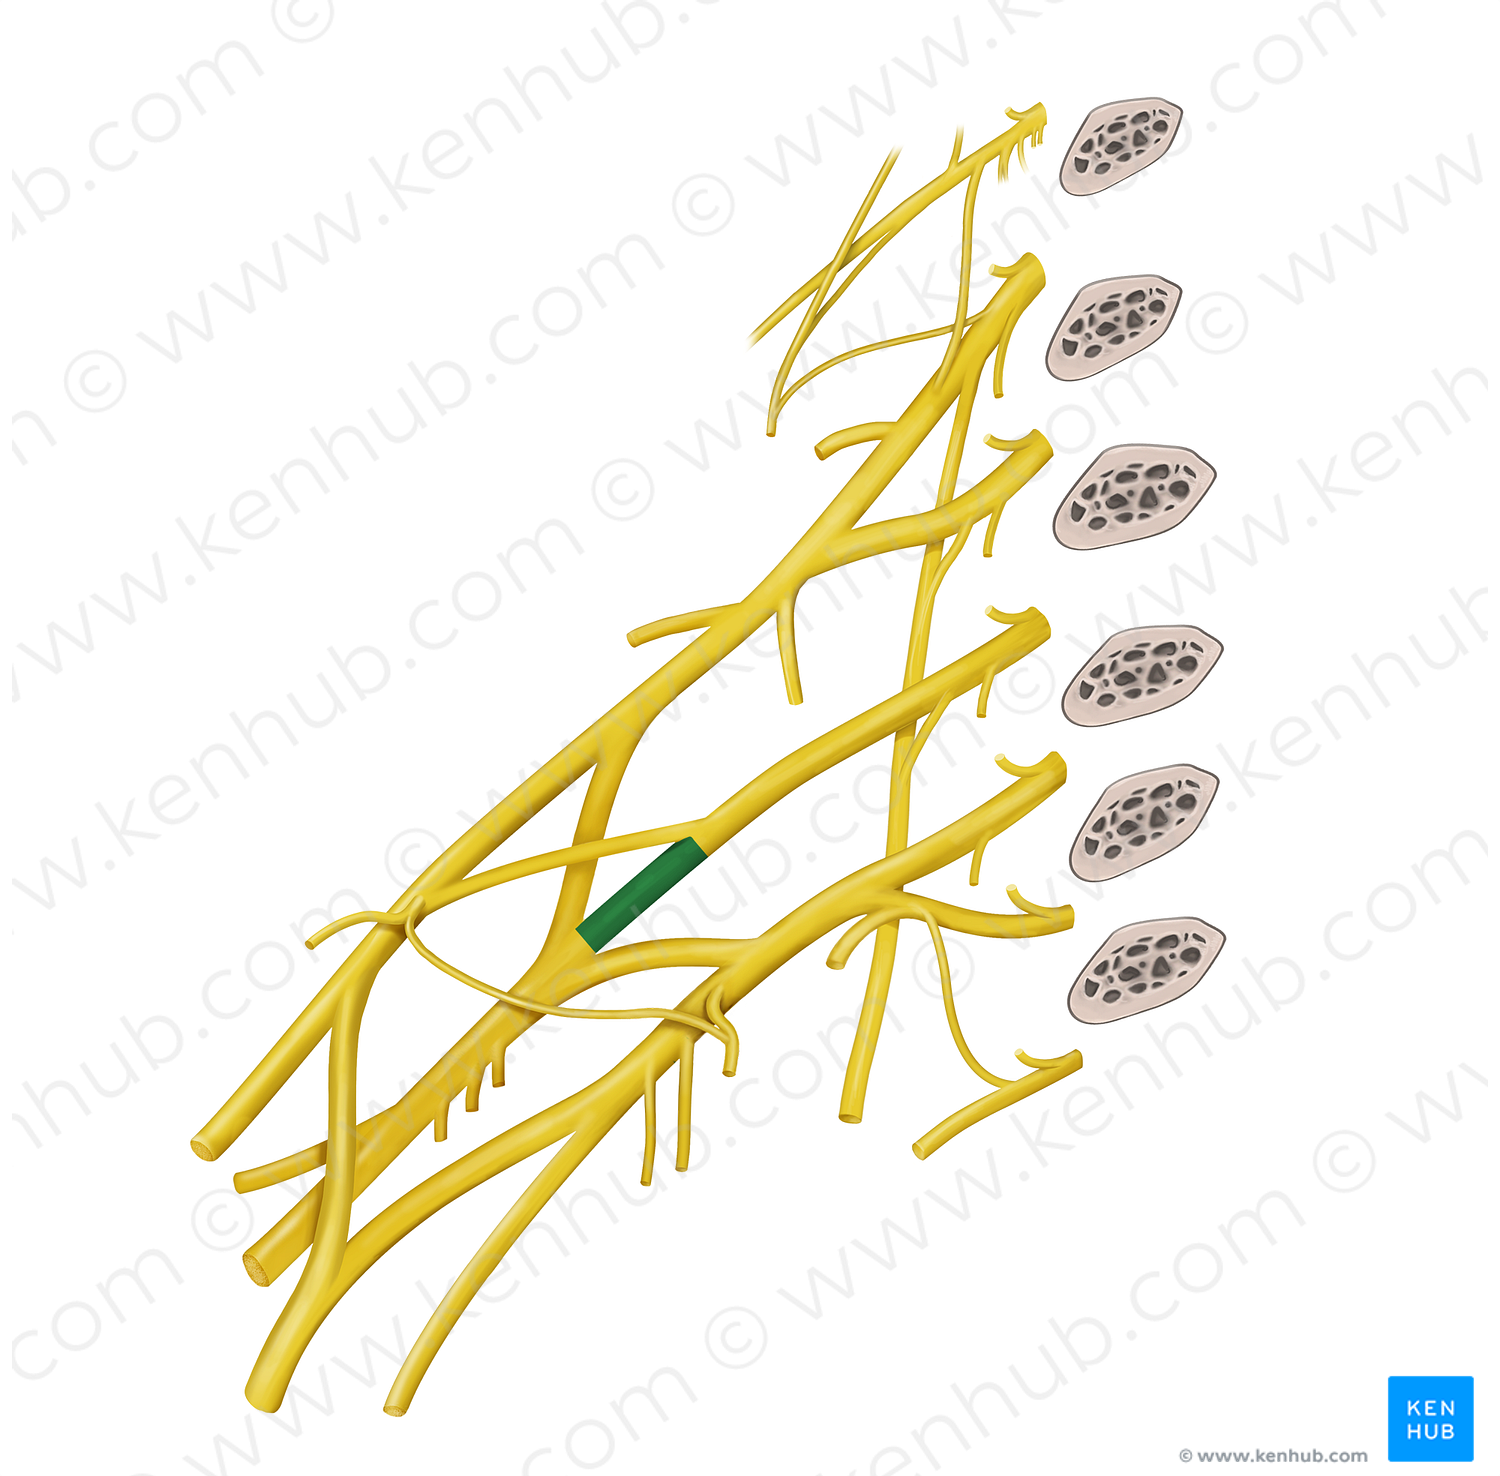 Posterior division of middle trunk of brachial plexus (#20600)